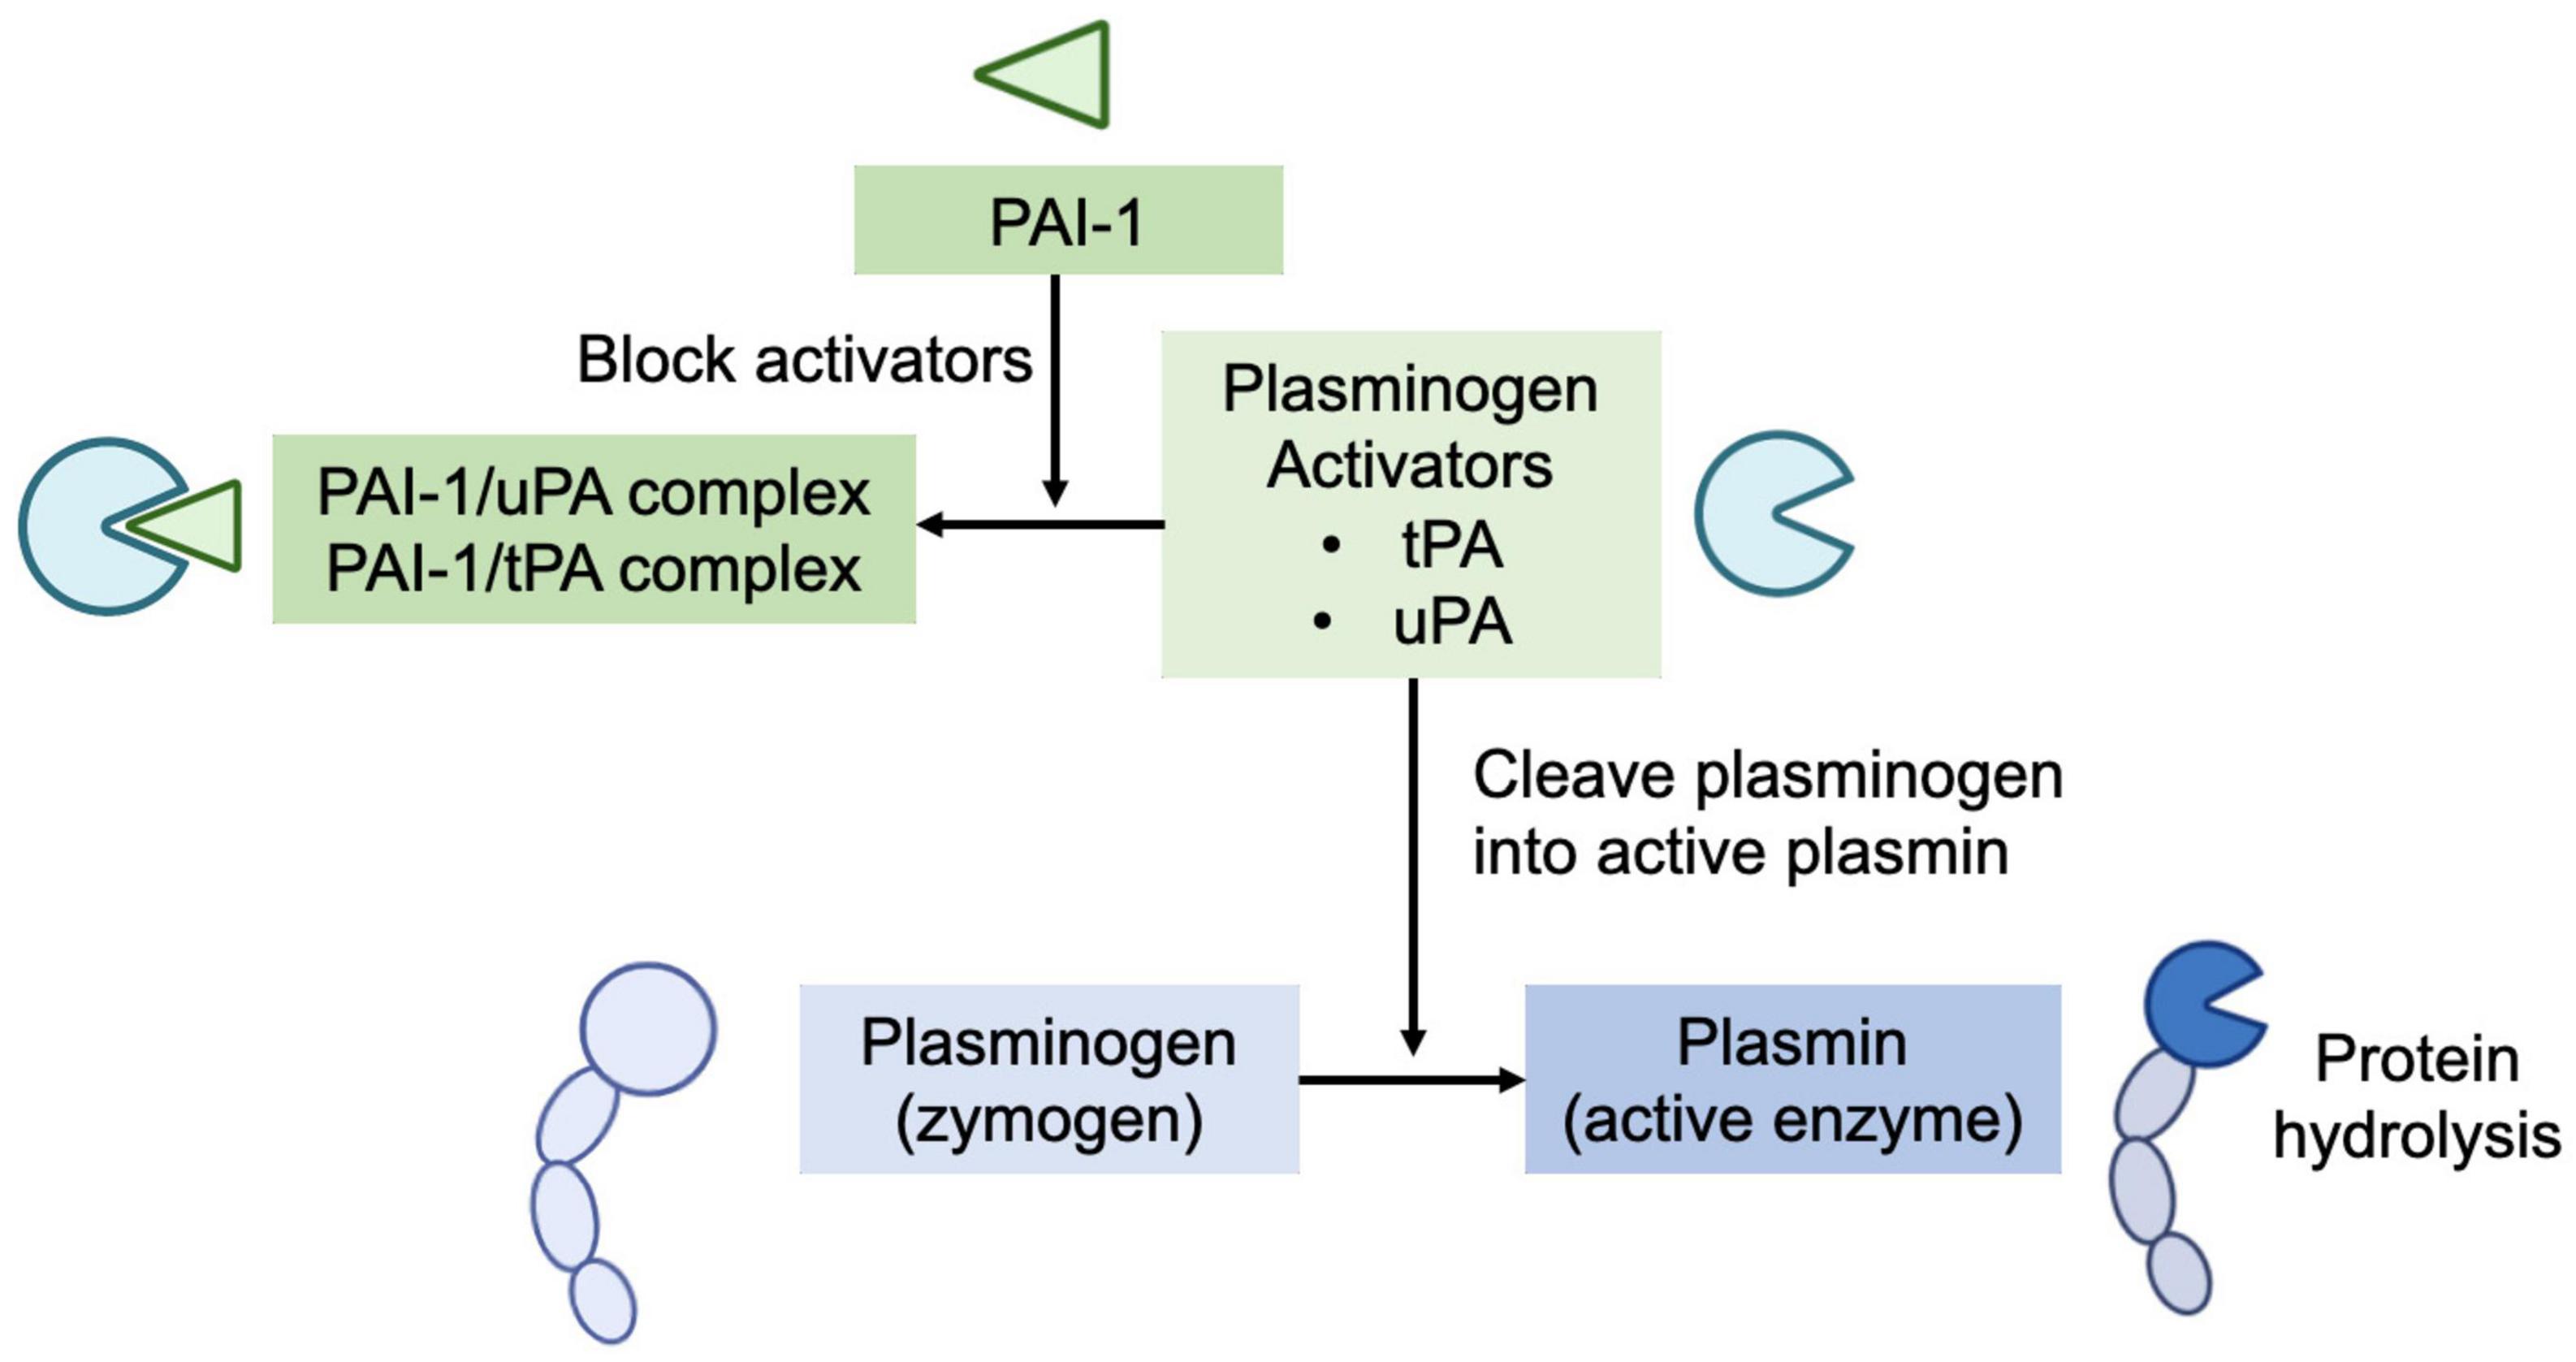 Pai 1 5g 5g. Tissue plasminogen Activator. Ген pai-1 4g. Ингибитор активатора плазминогена 1 pai-1 -675 5g/4g 5g4g. Urokinase features.